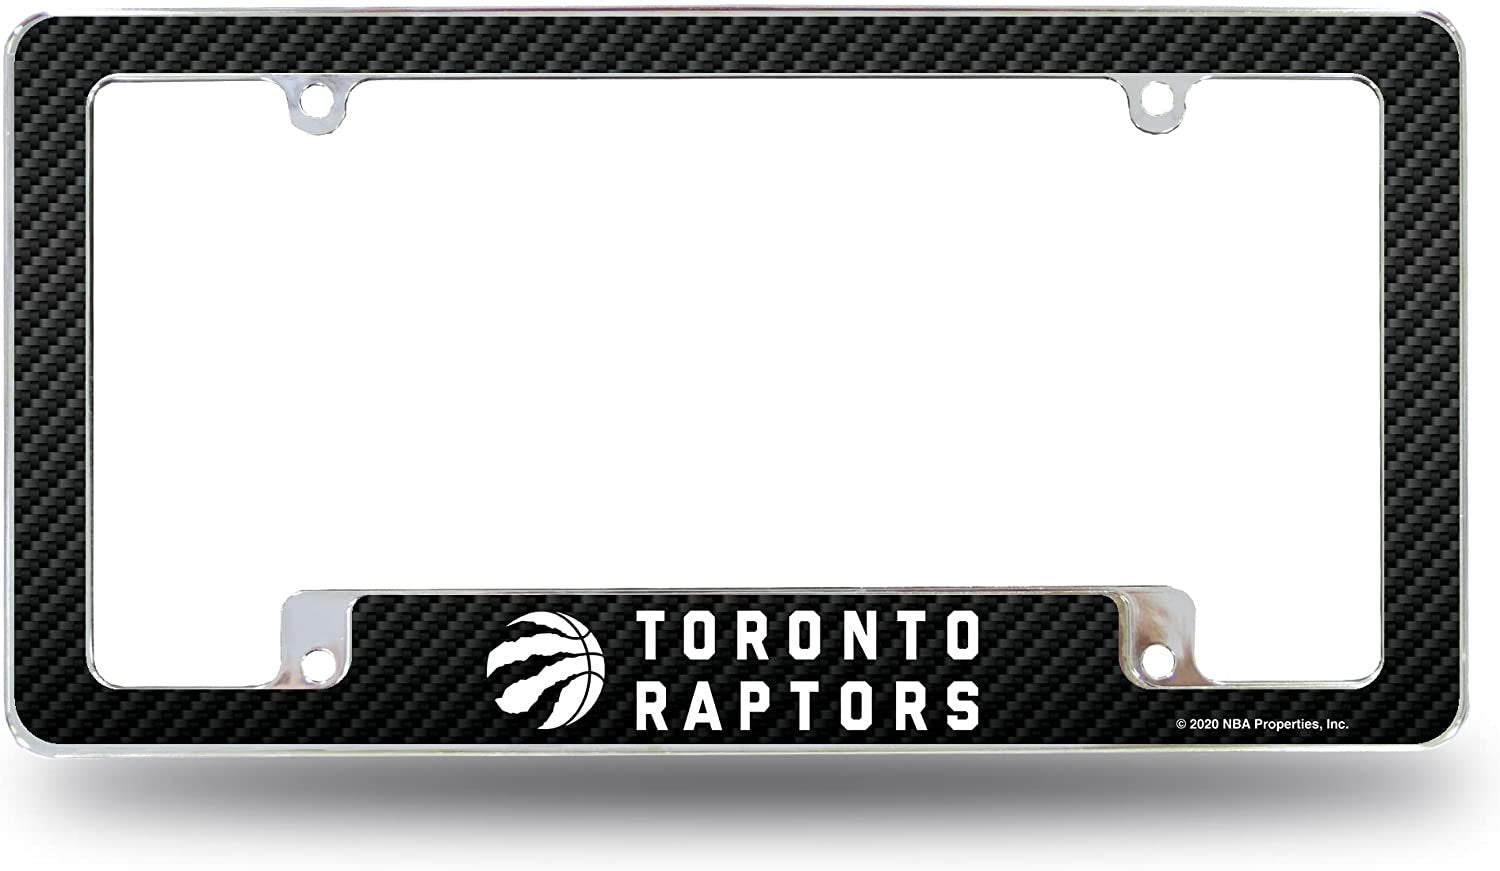 Toronto Raptors Metal License Plate Frame Chrome Tag Cover Carbon Fiber Design 6x12 Inch